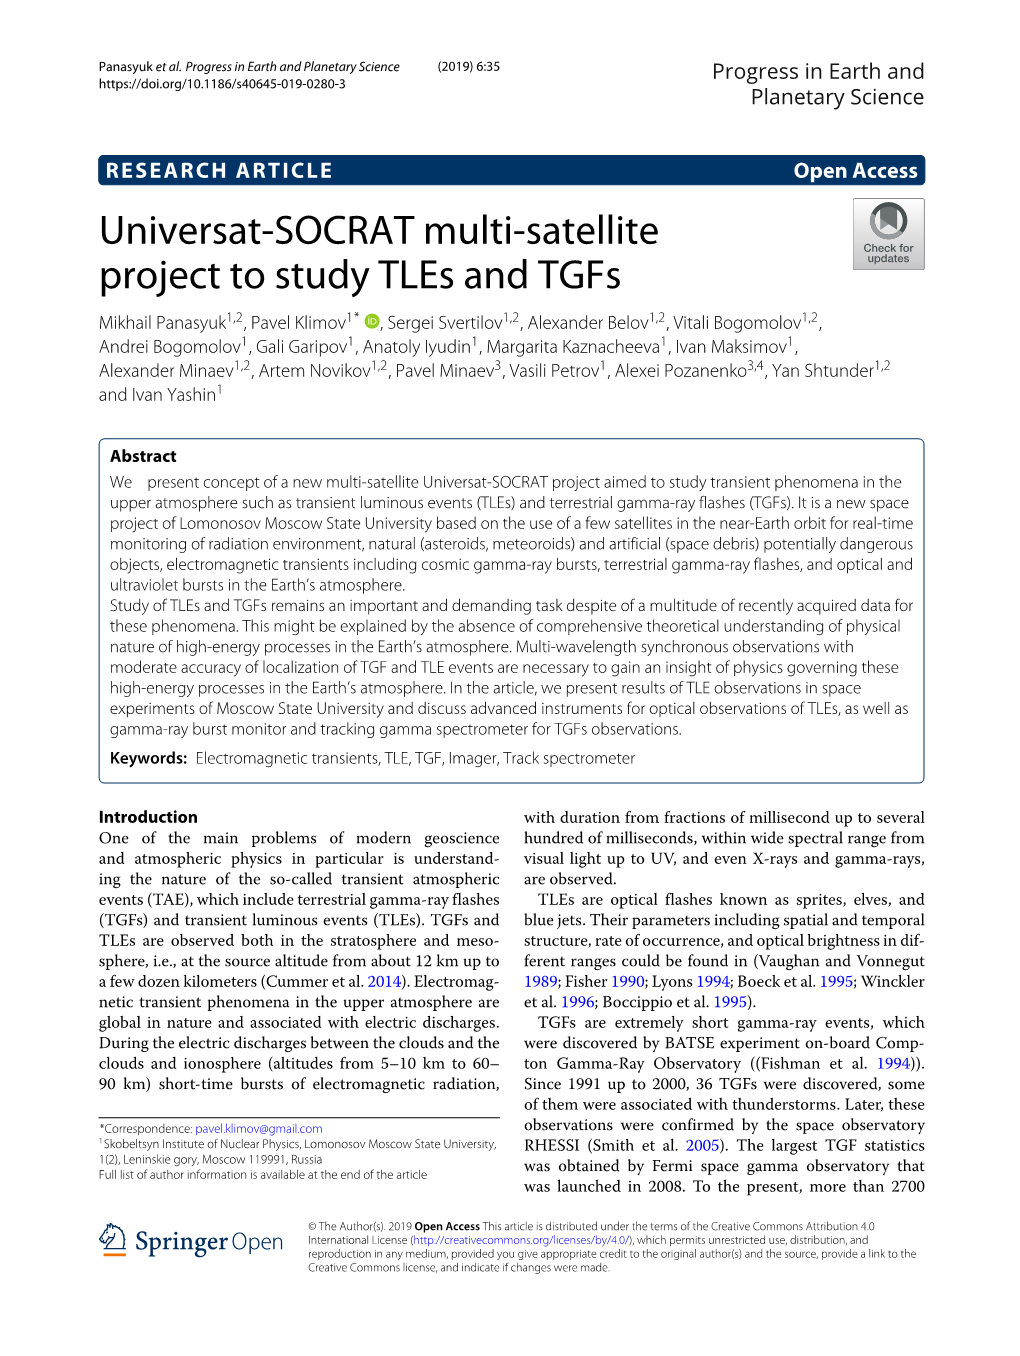 Universat-SOCRAT Multi-Satellite Project to Study Tles and Tgfs